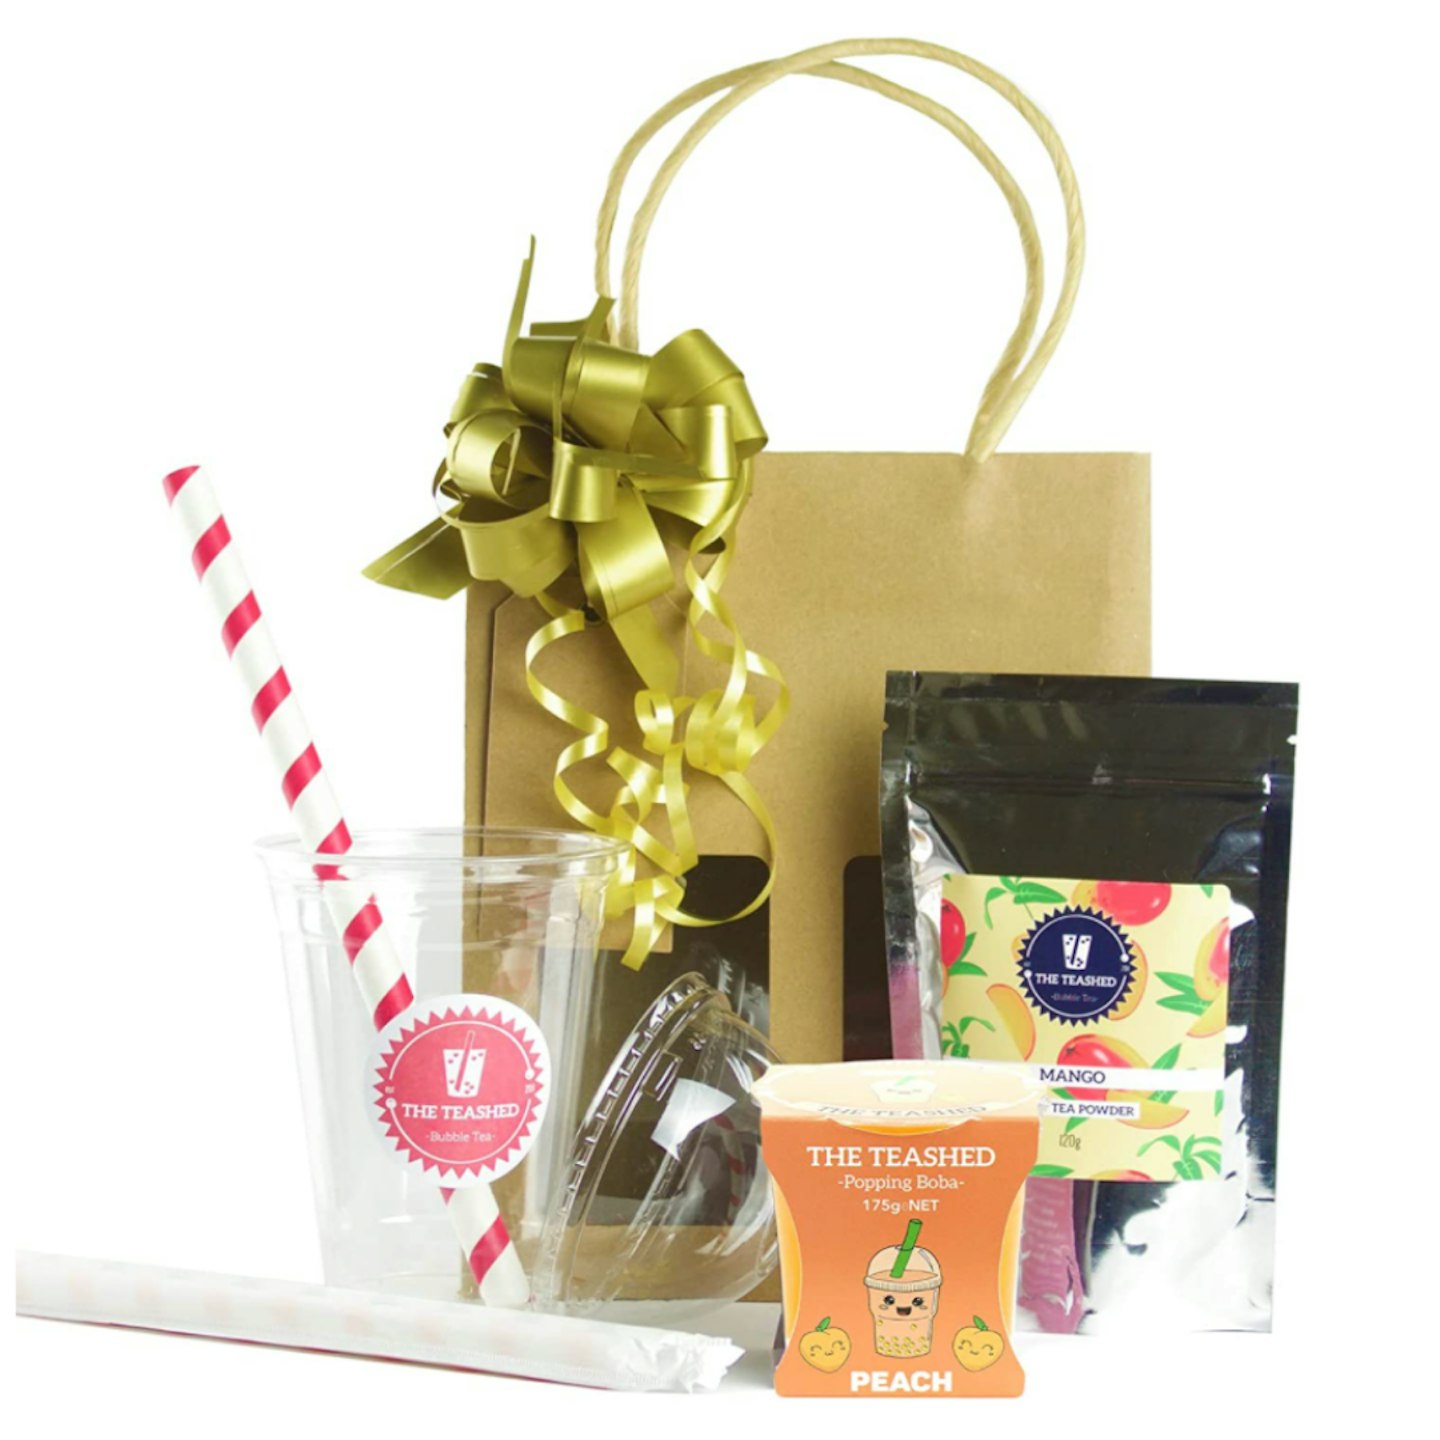 Crafky DIY Bubble Tea Kit, Complete with Boba Tapioca Pearls, Straws, and  DIY Tea Bags Premium Bubble Tea Gift Set